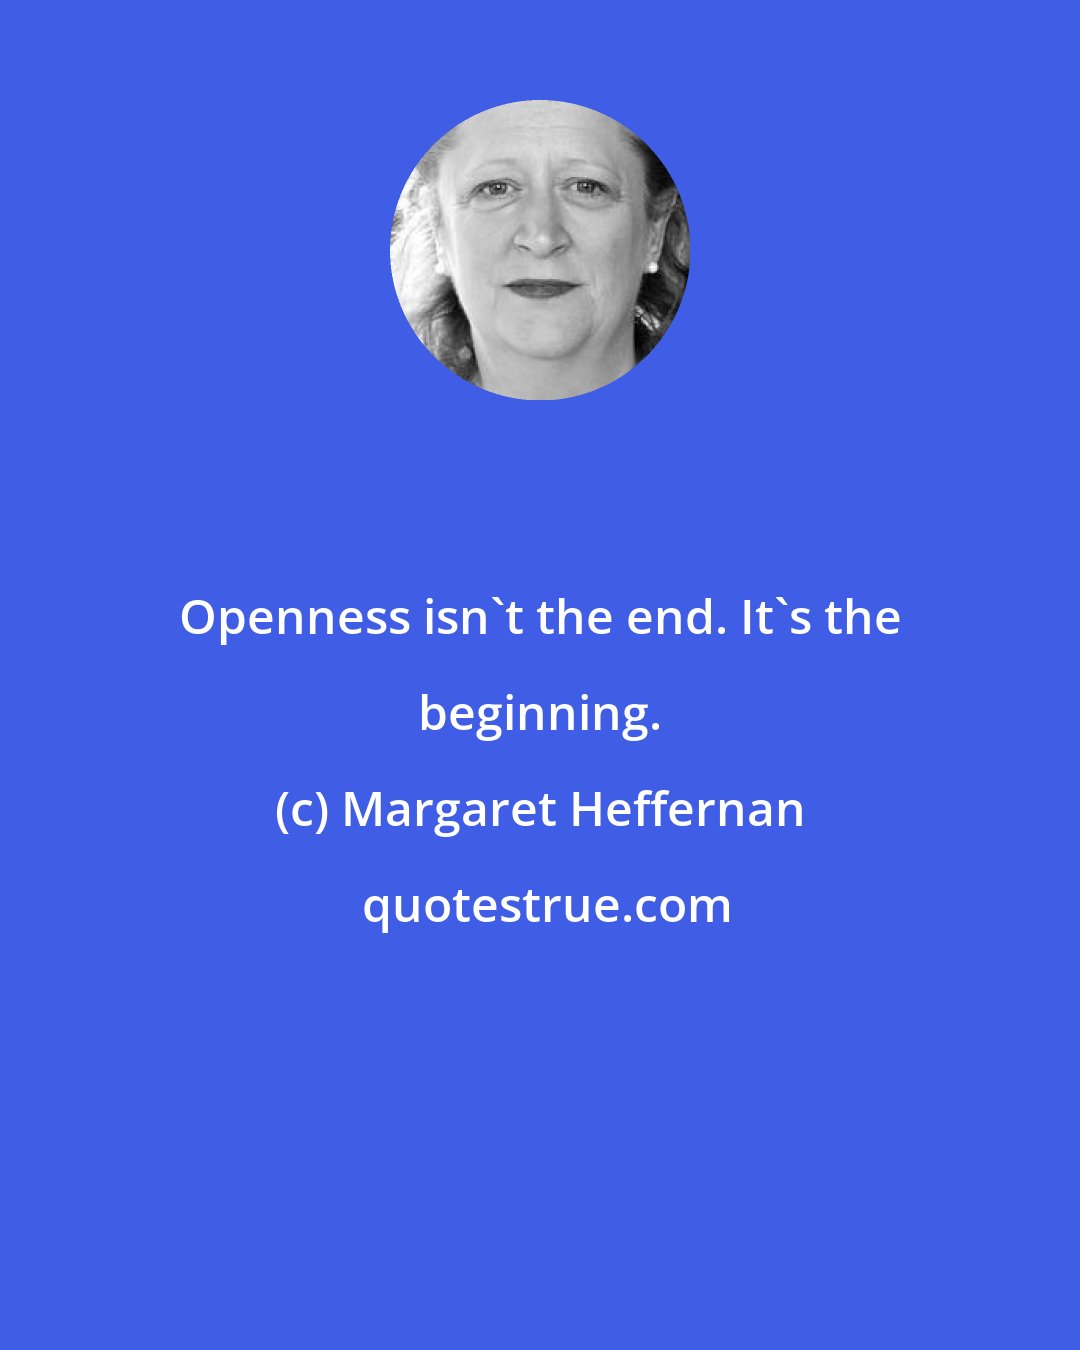 Margaret Heffernan: Openness isn't the end. It's the beginning.